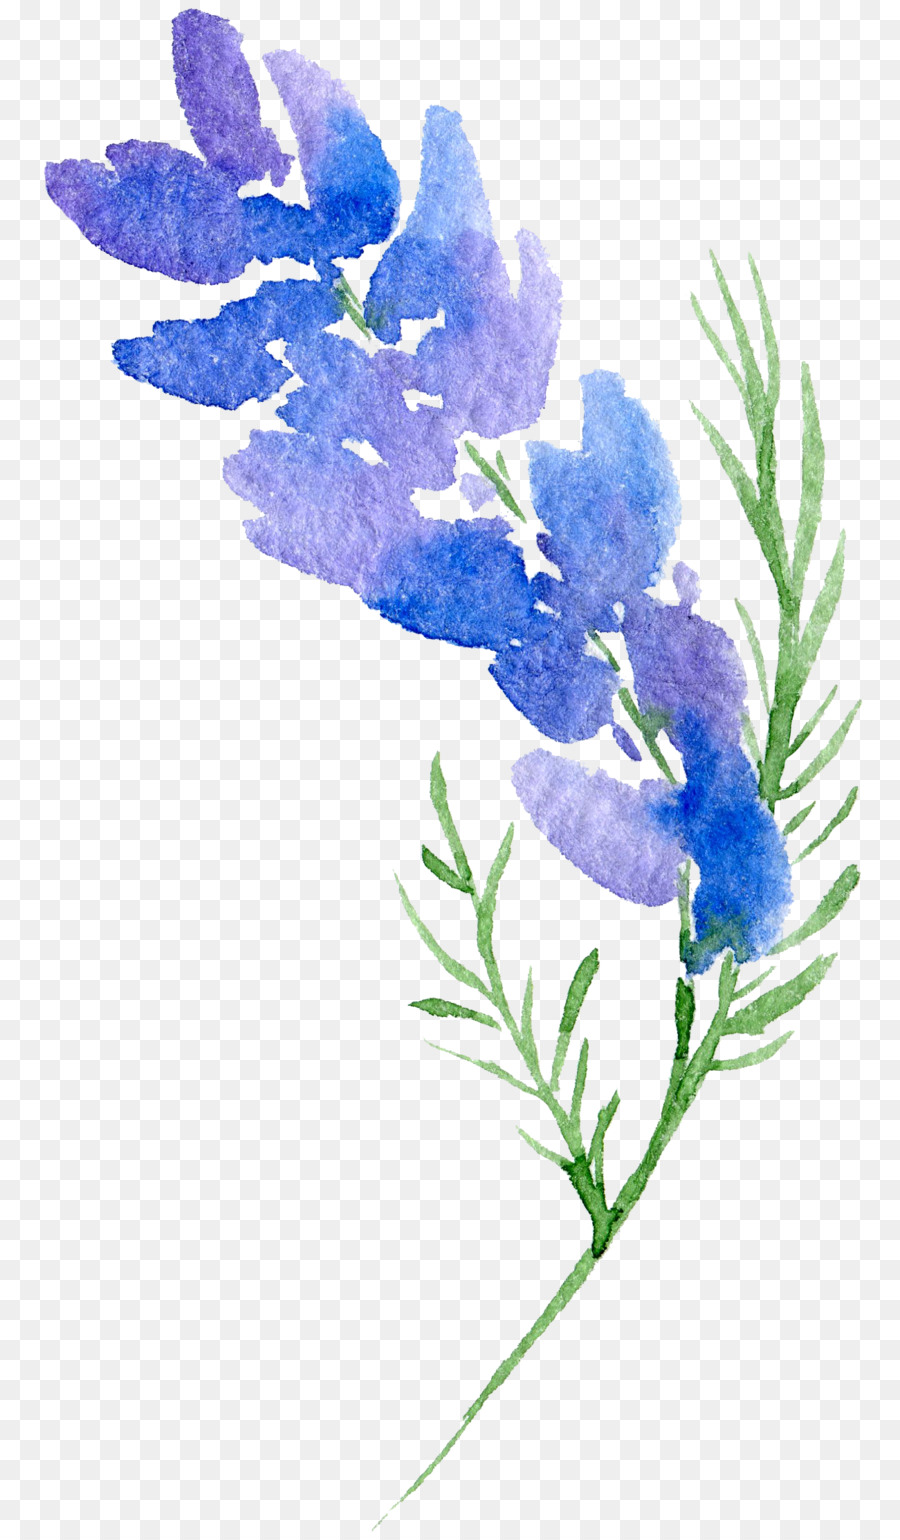 Floral design Flower Watercolor painting - Transparent background floral botanical watercolor flowers png download - 1301*2215 - Free Transparent Floral Design png Download.